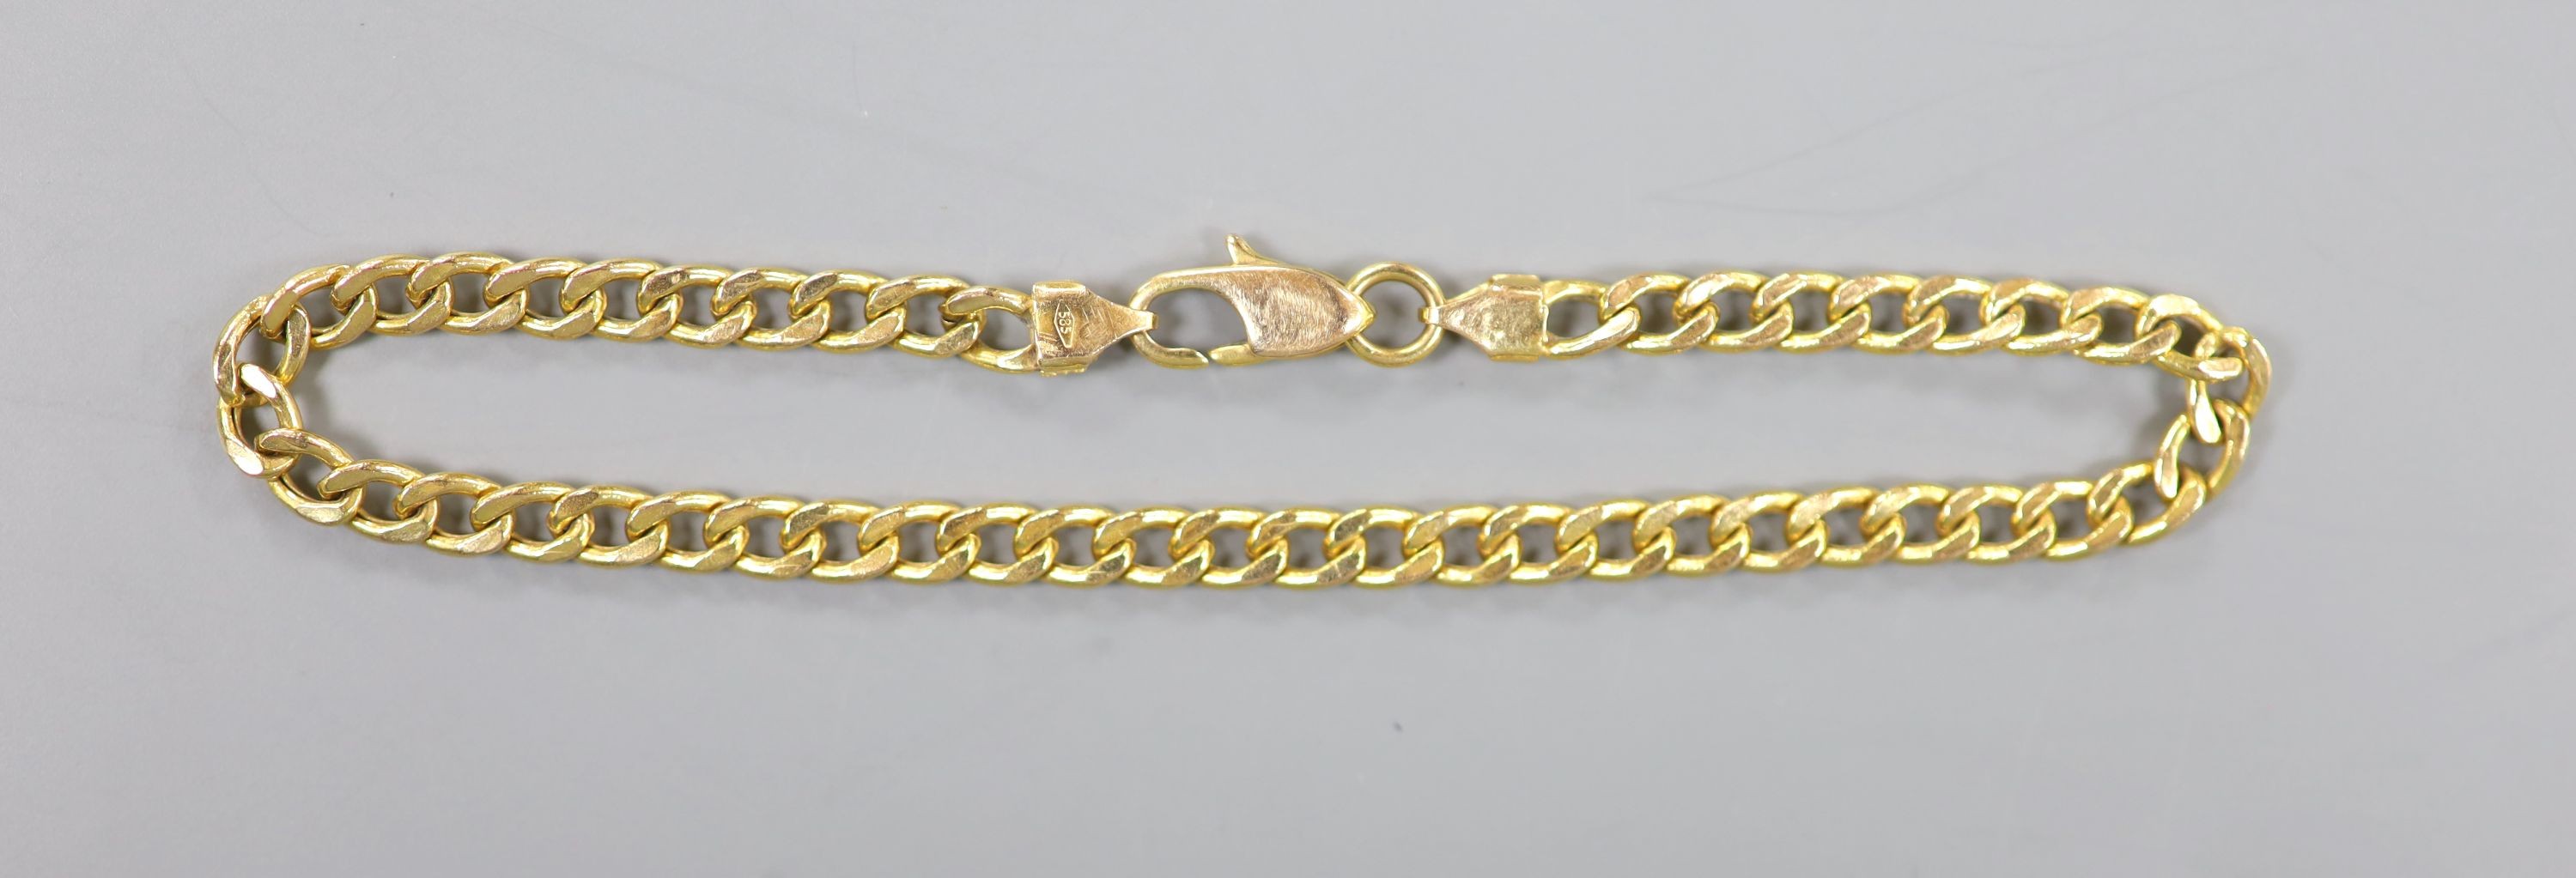 A modern 585 yellow metal curb link bracelet, 18cm, 3.3 grams.